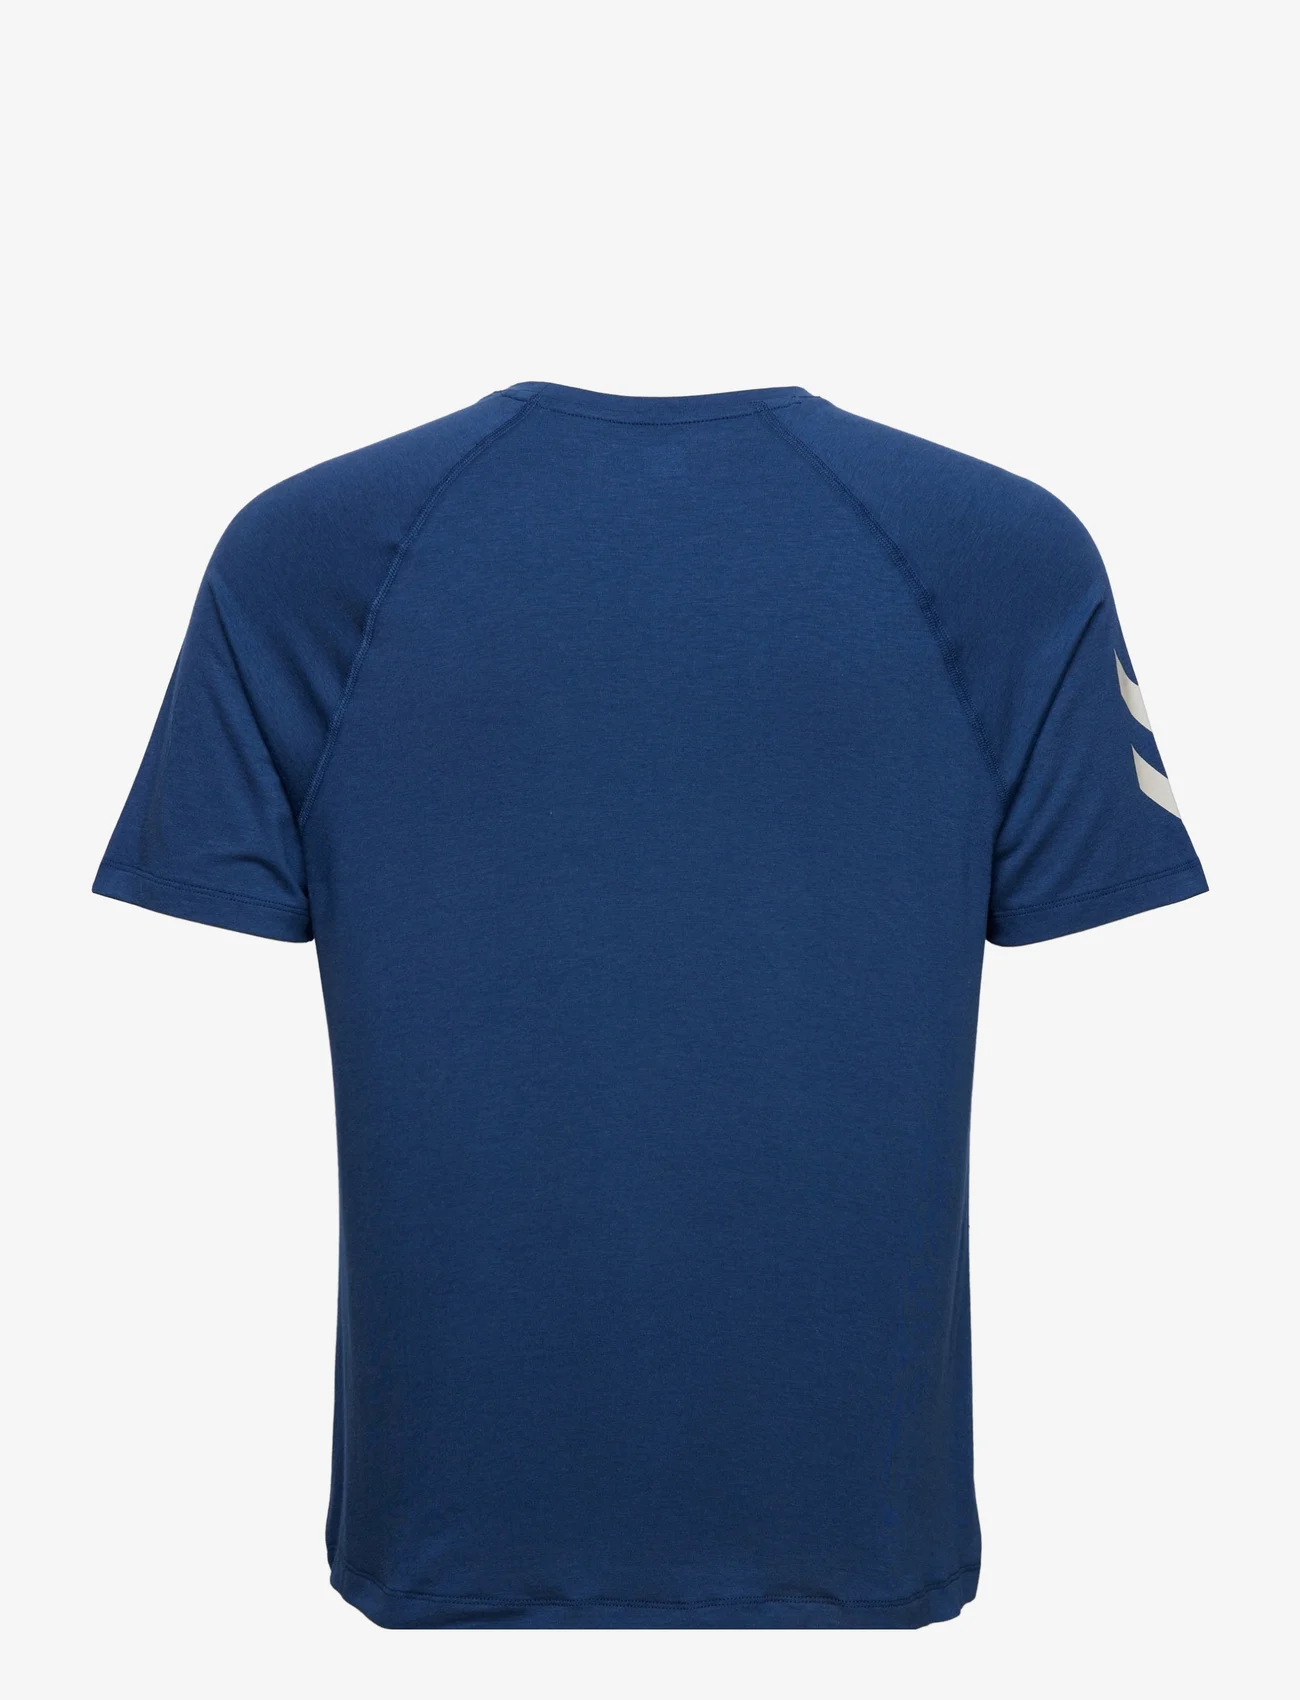 Hummel - hmlMT LAZE T-SHIRT - t-shirts - insignia blue - 1